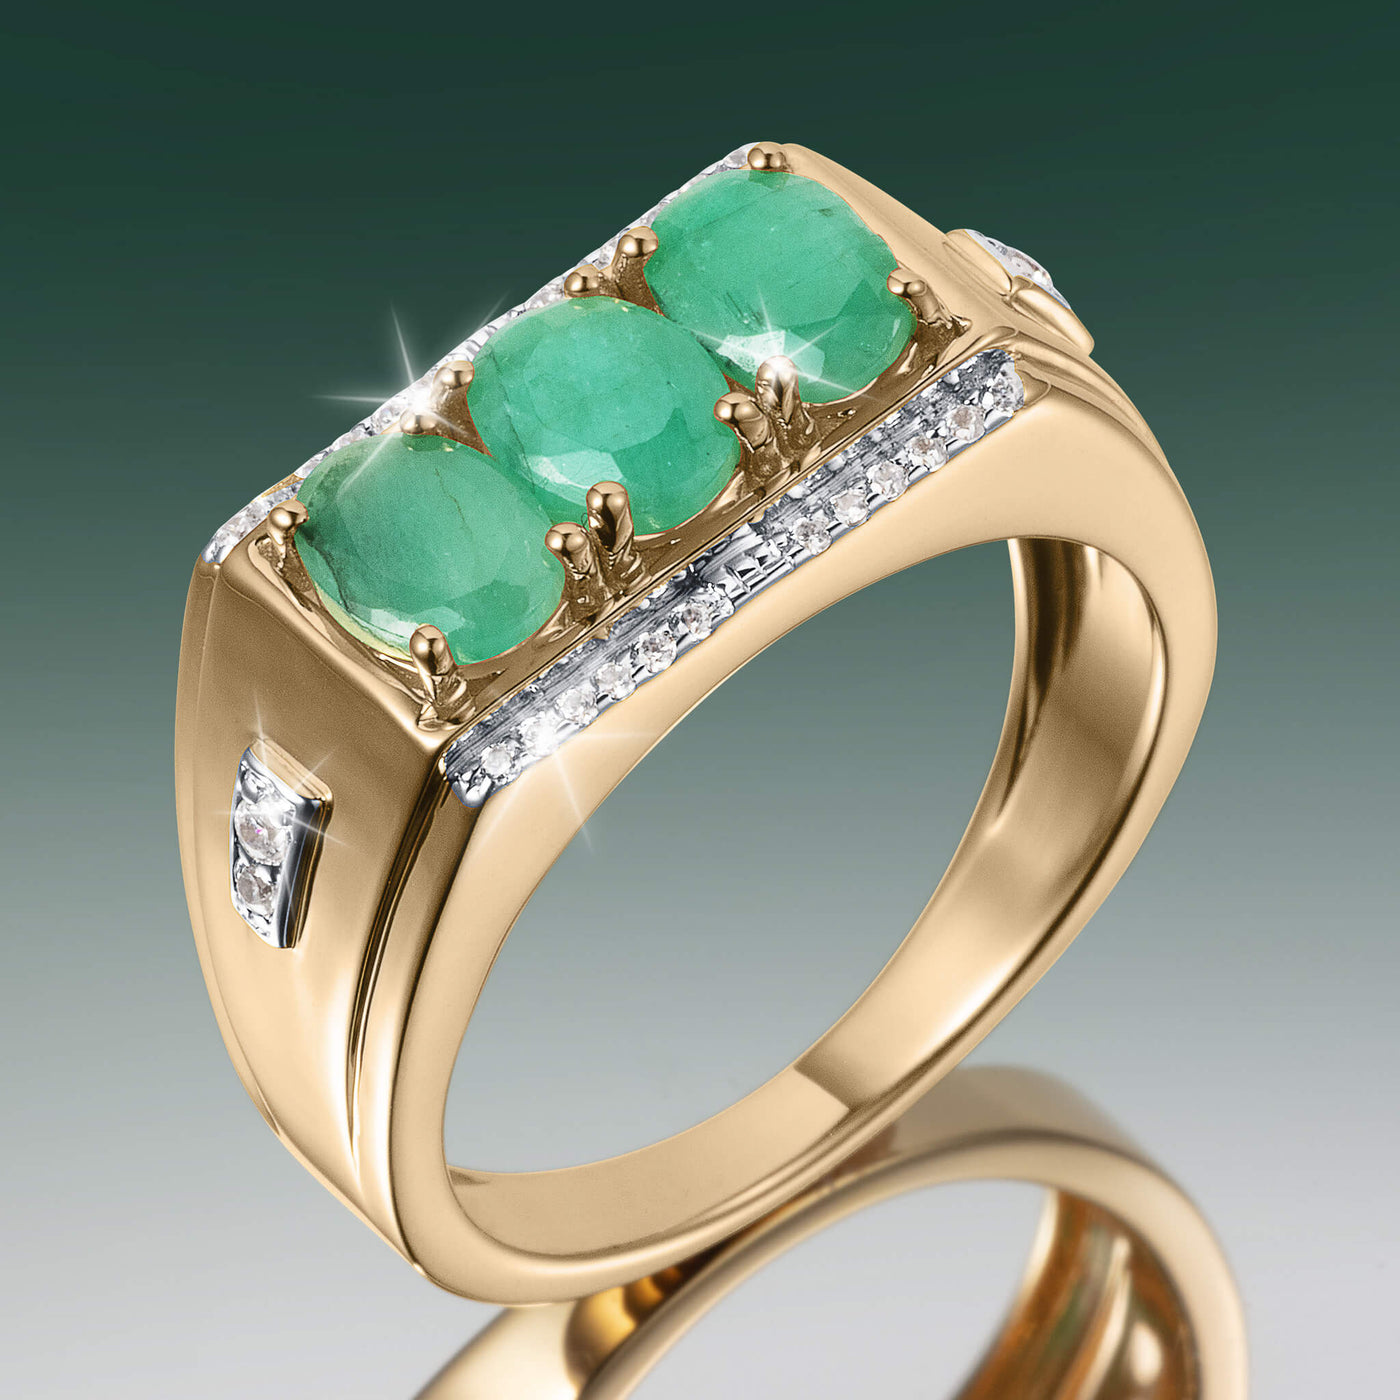 Daniel Steiger Apex Emerald Men's Ring